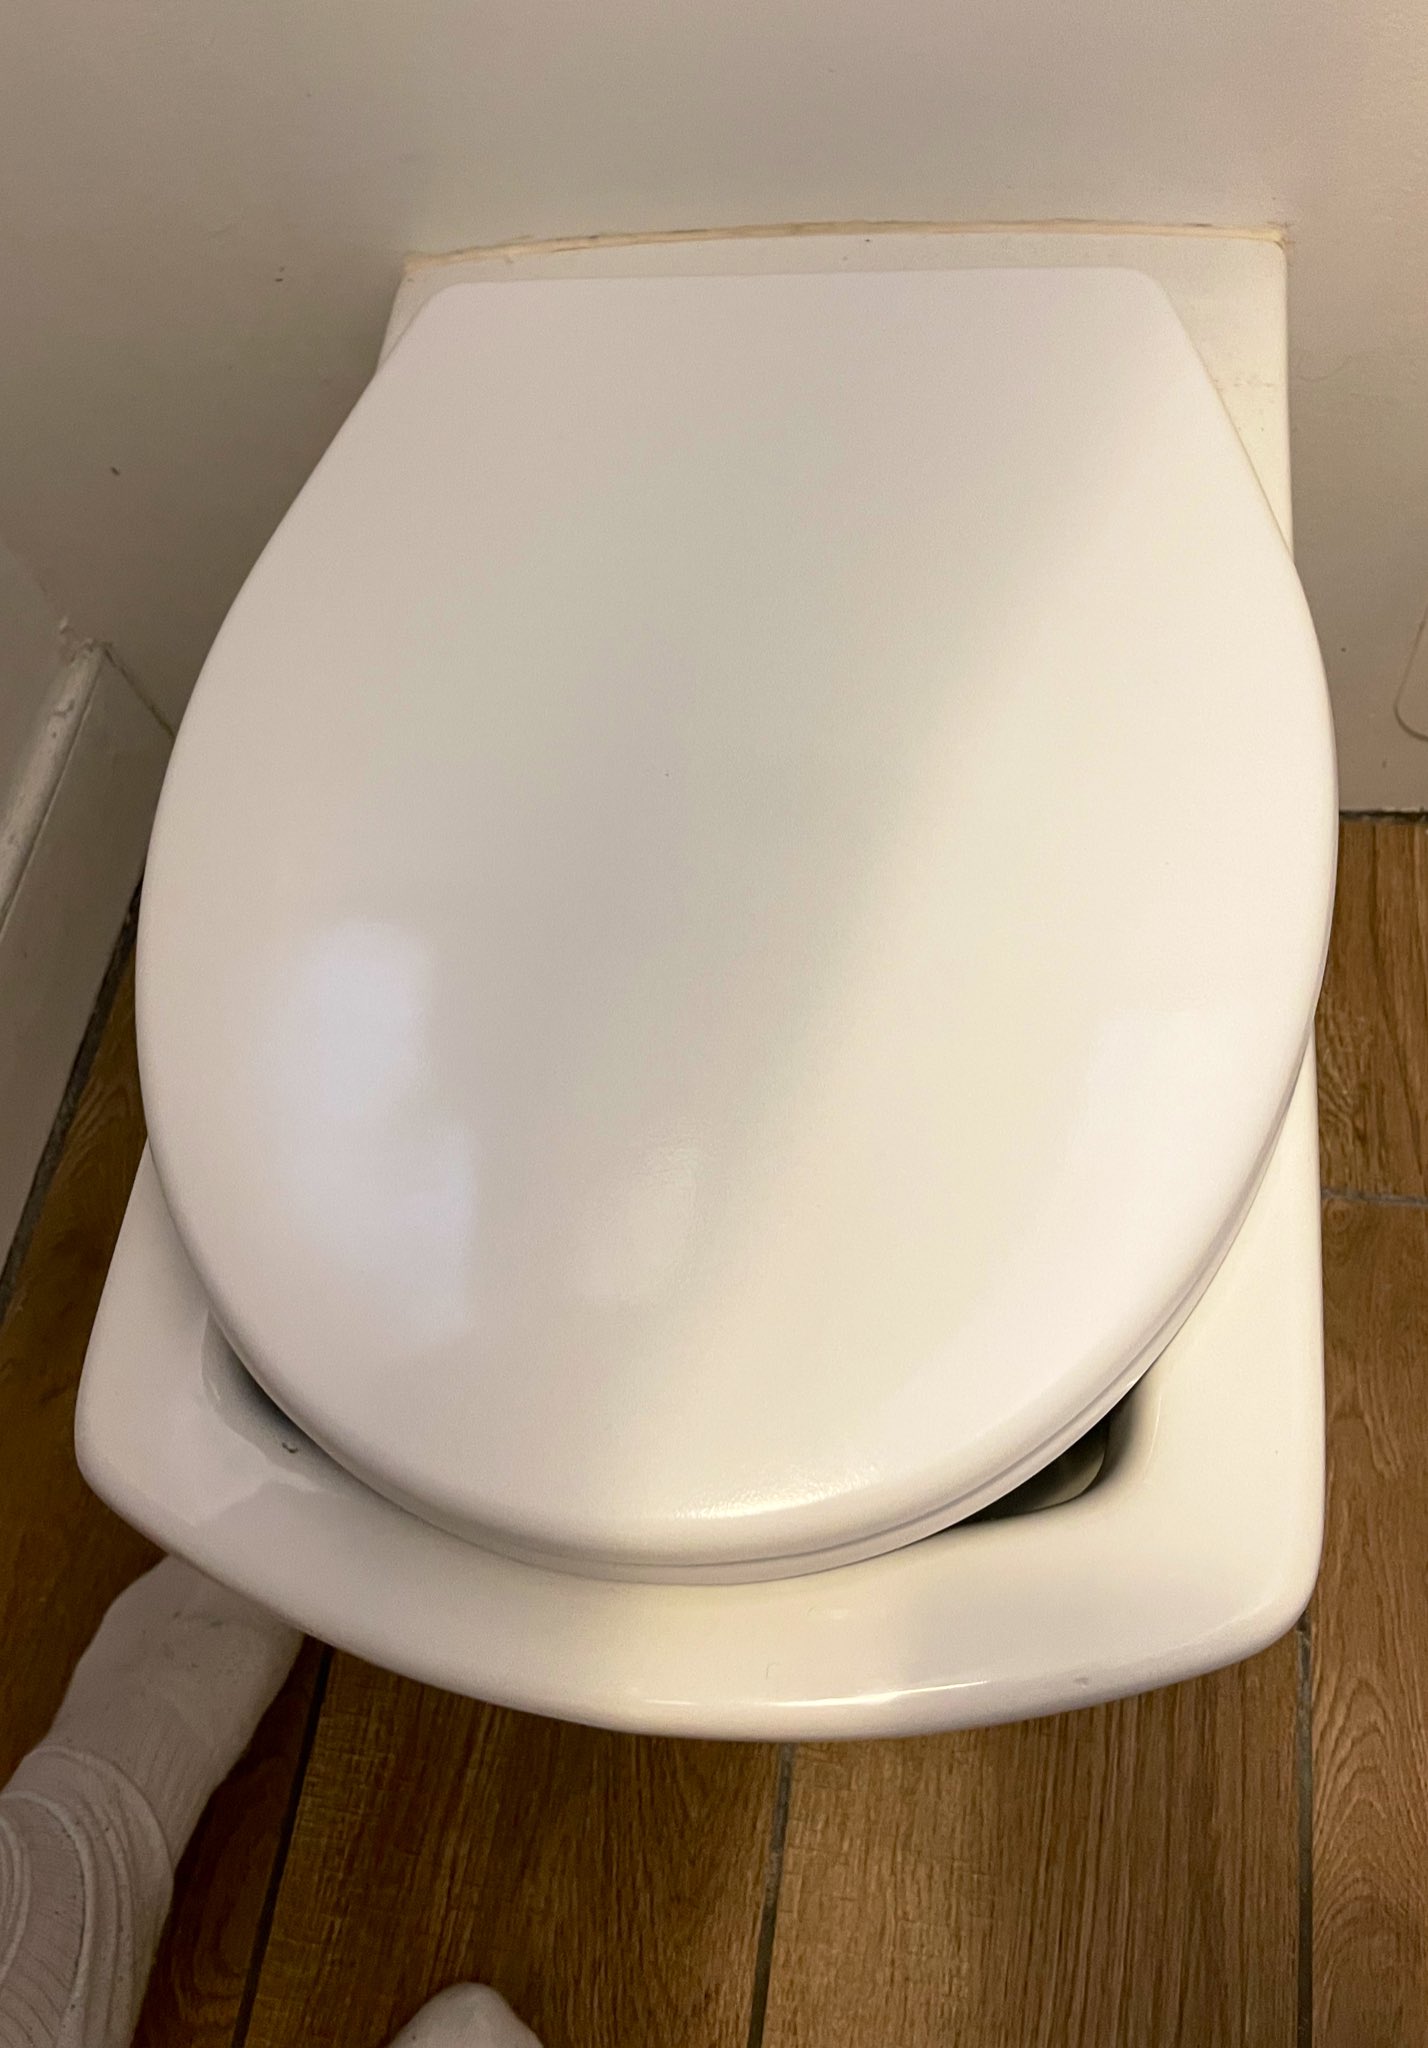 infuriating landlords - round toilet seat on square toilet